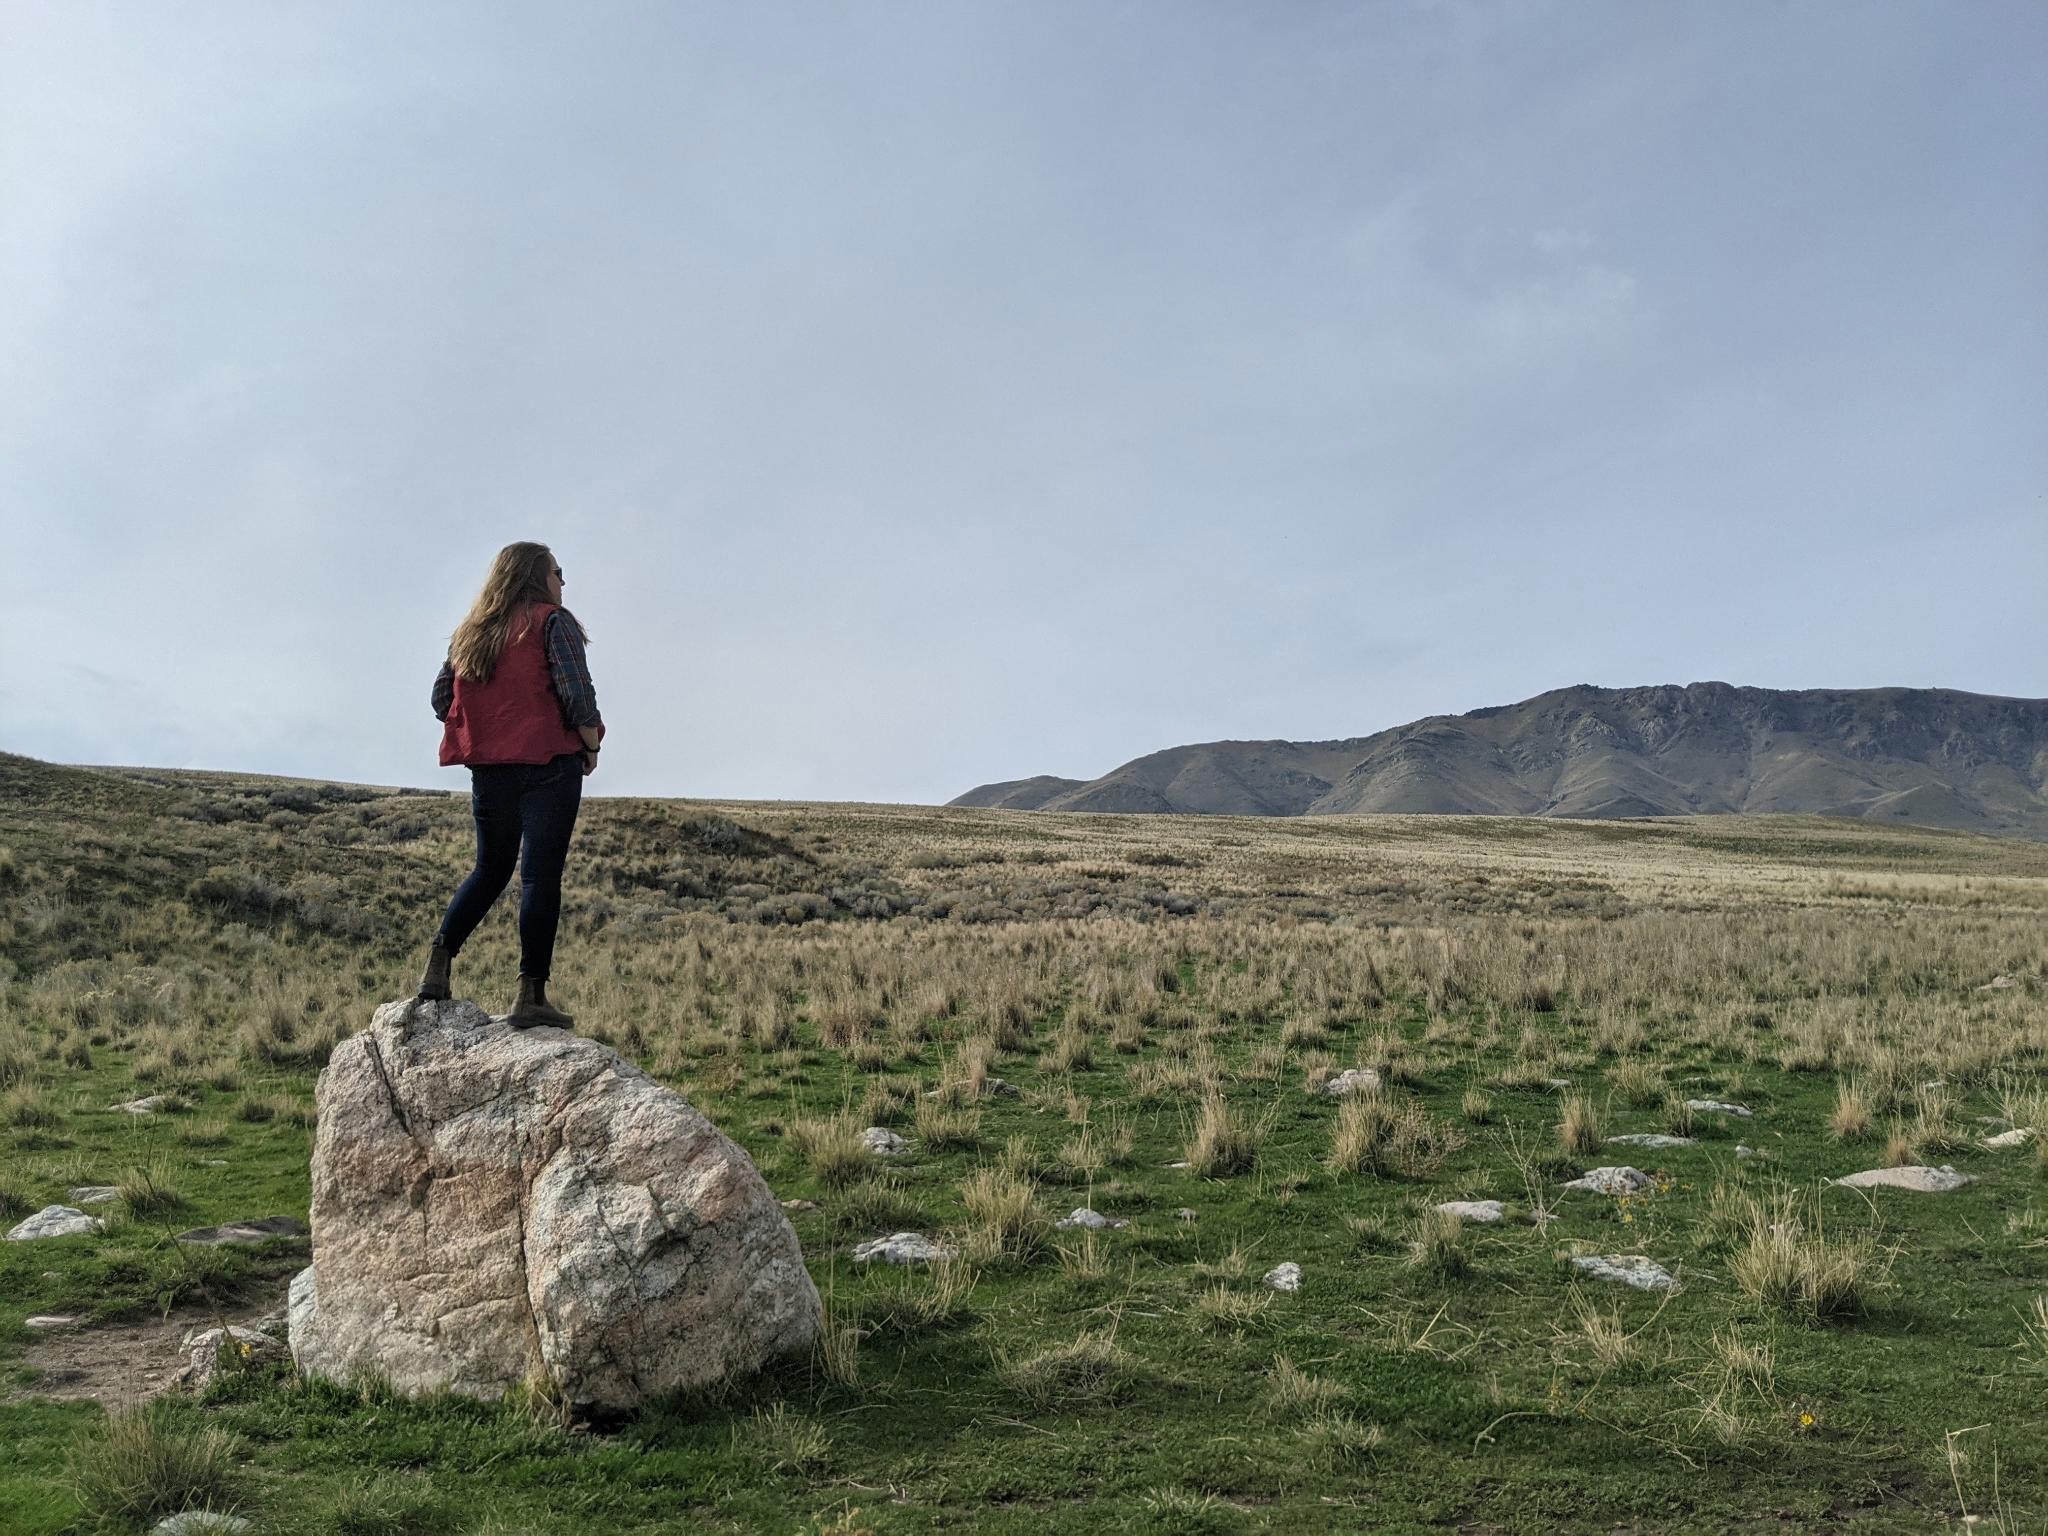 Amelia standing on a rock on Antelope Island, looking for Buffalo